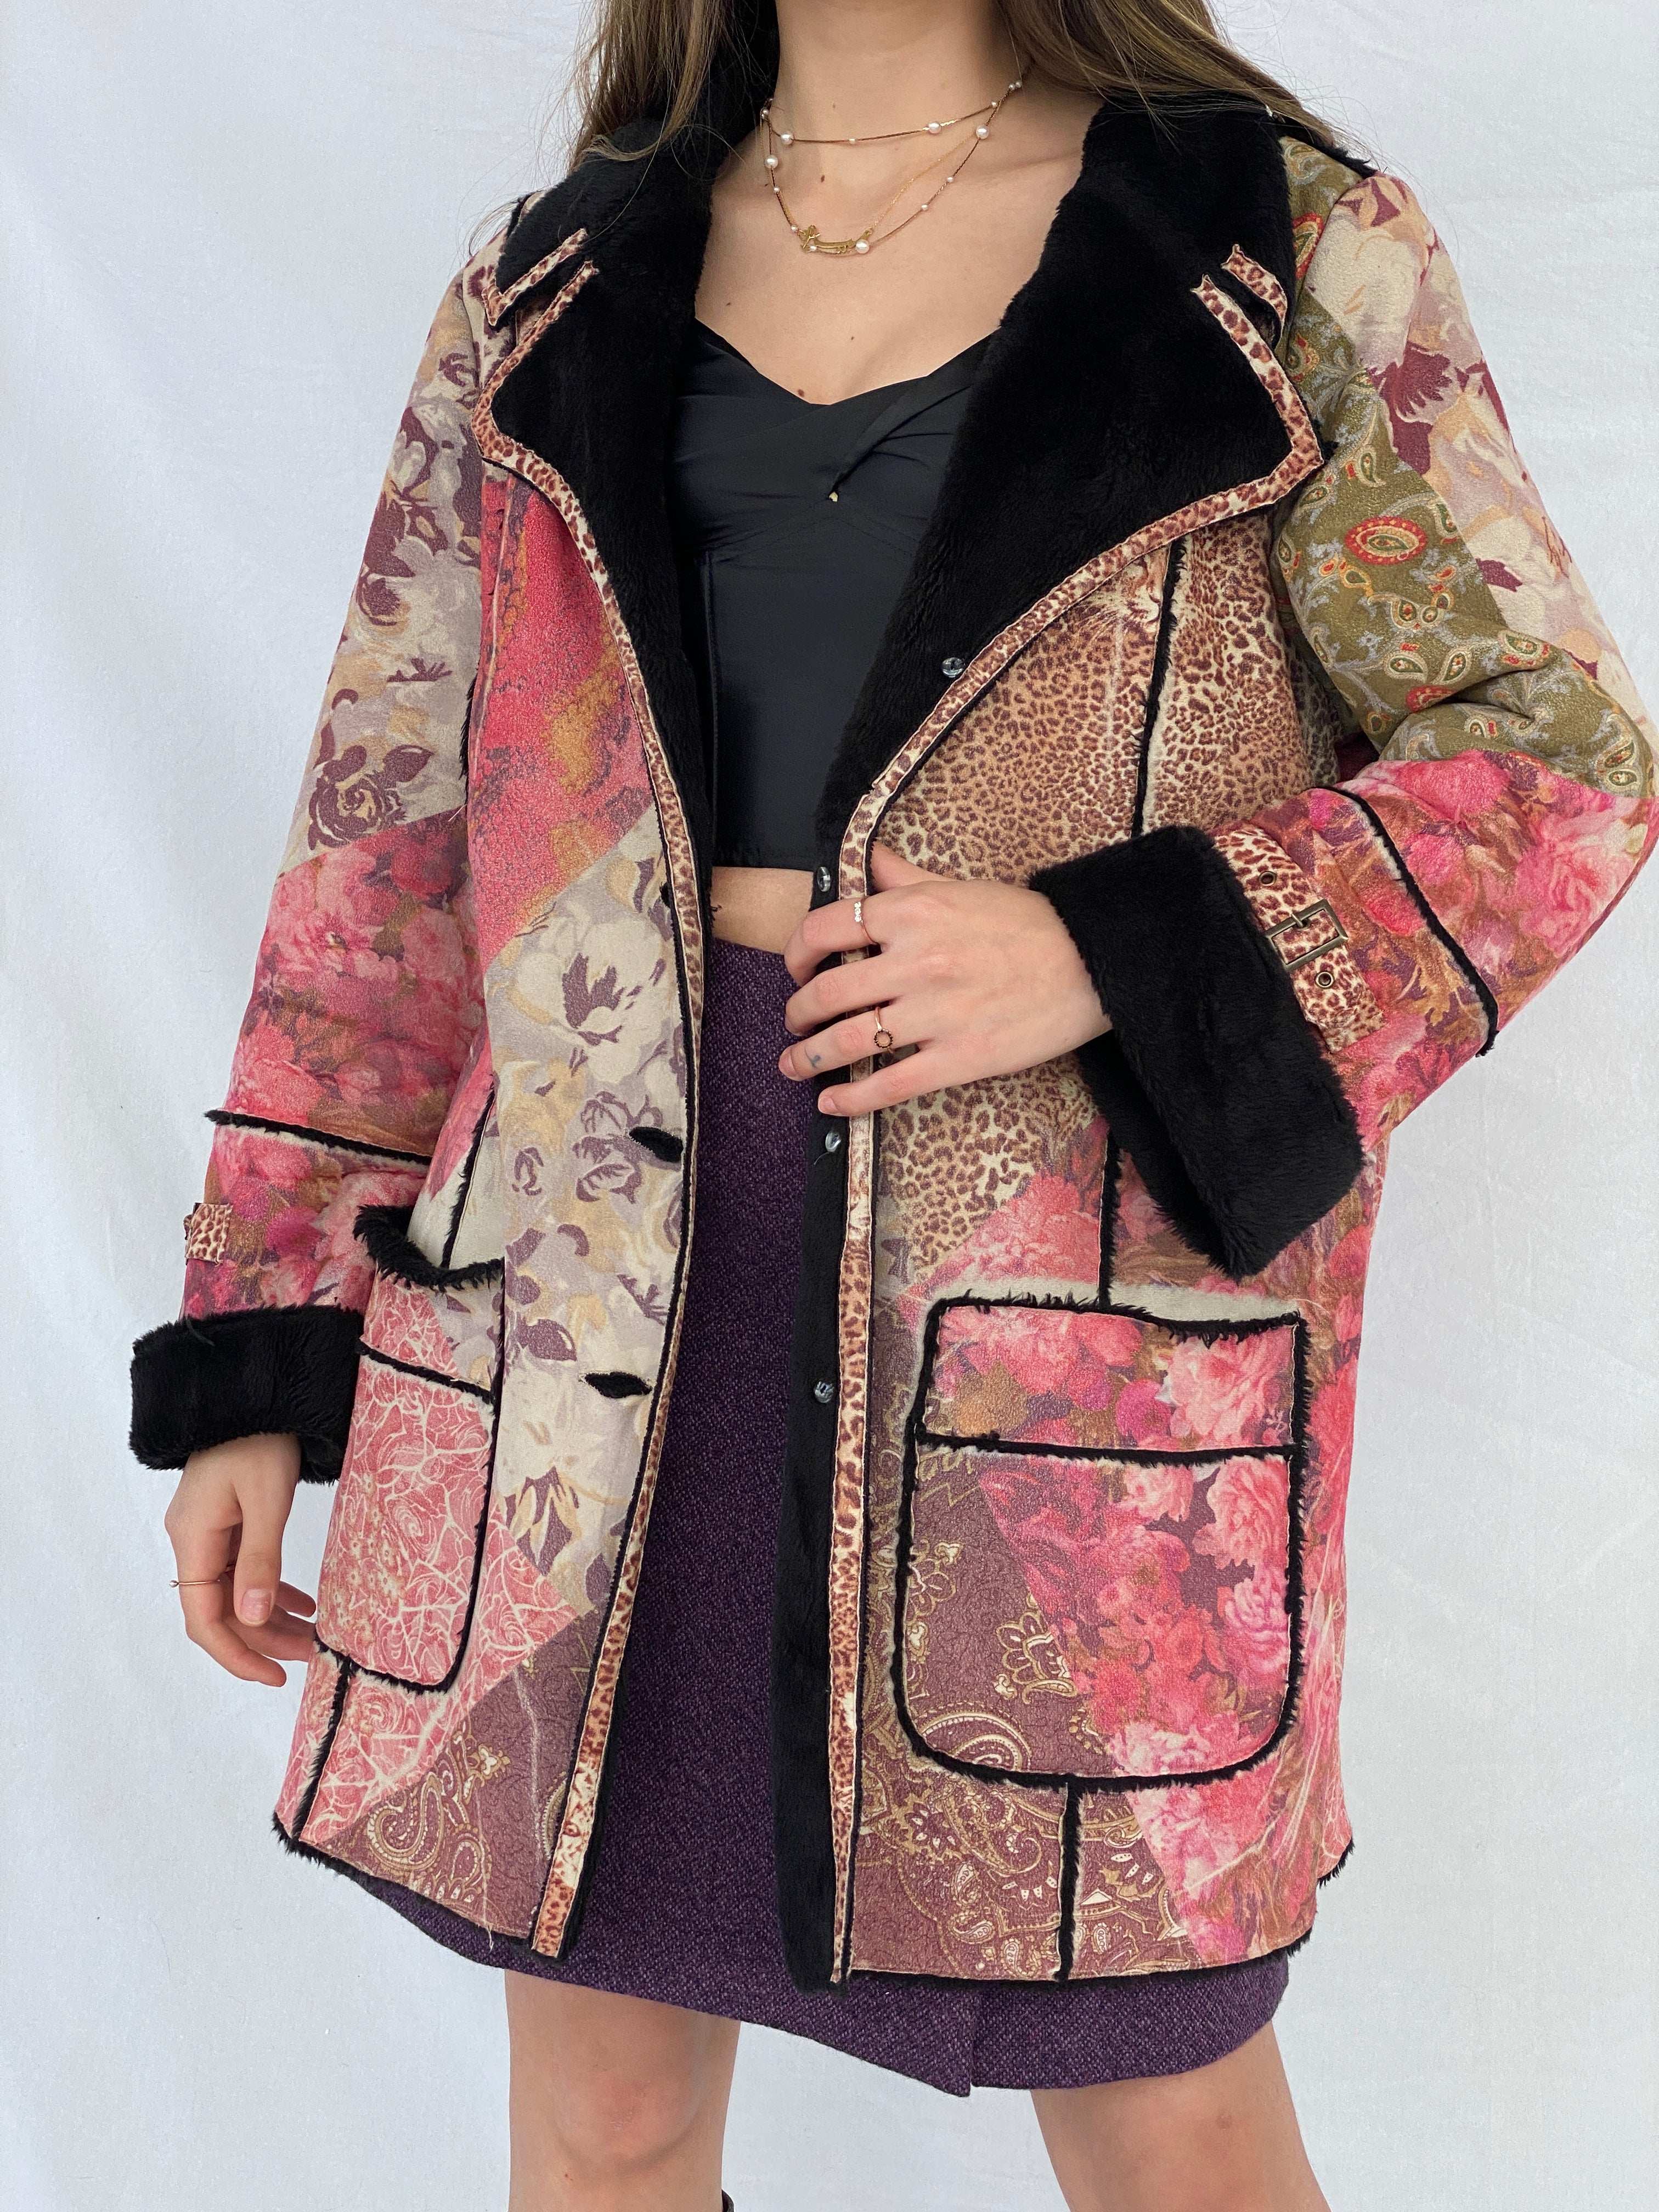 Beautiful Vintage KRISS Sweden Floral Afghan Style Fur-Lined Coat - Size Large